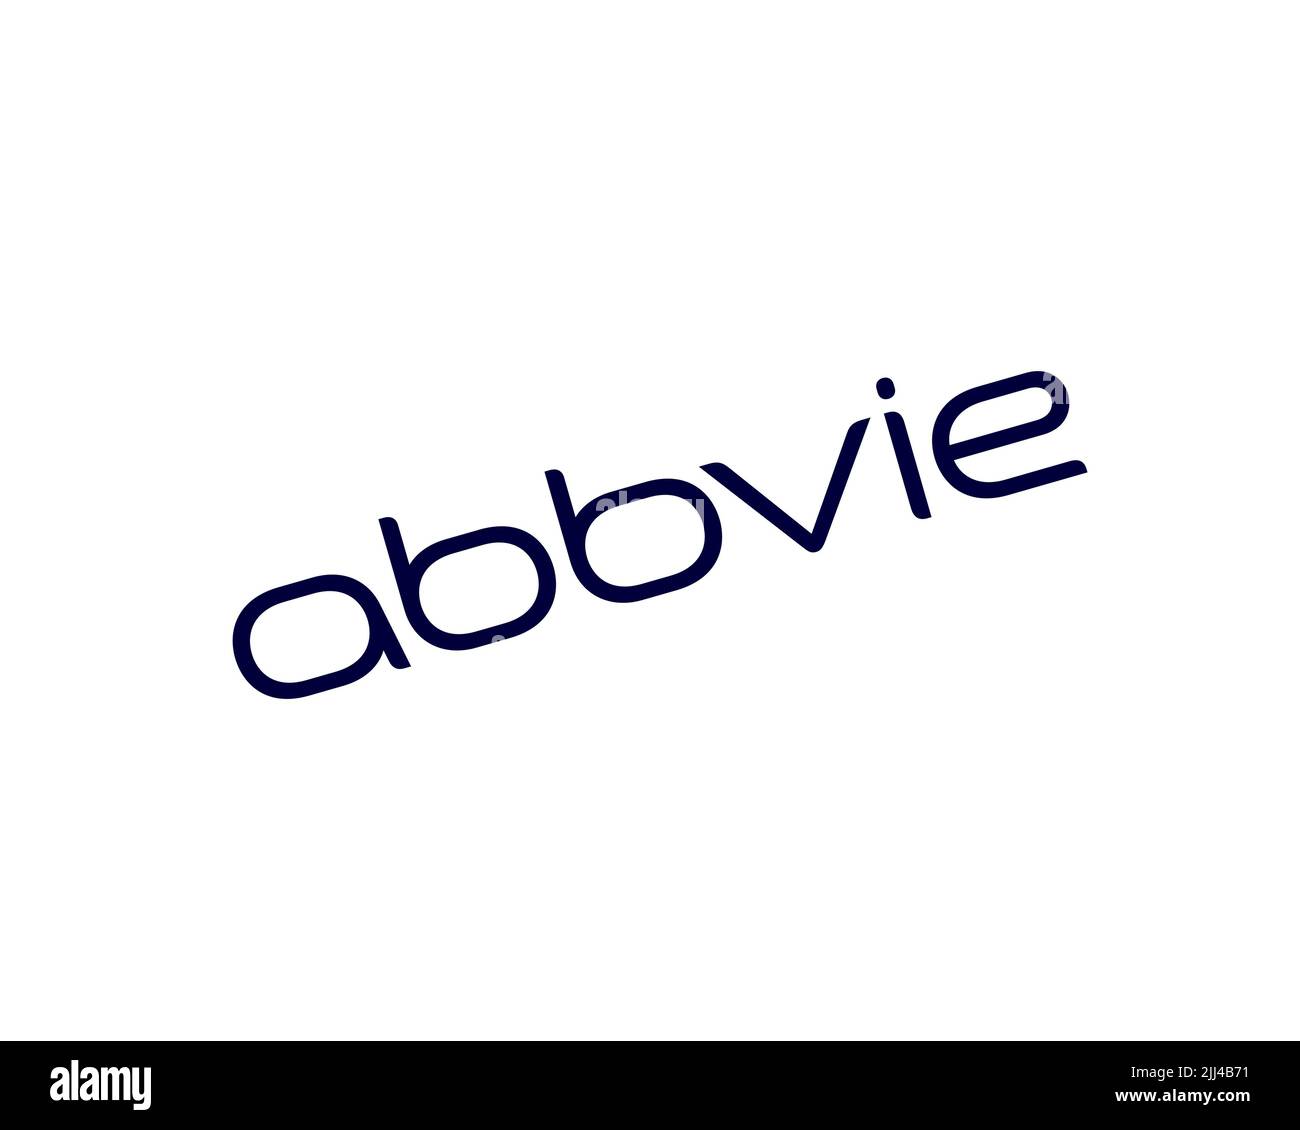 AbbVie Inc. rotated logo, white background Stock Photo - Alamy